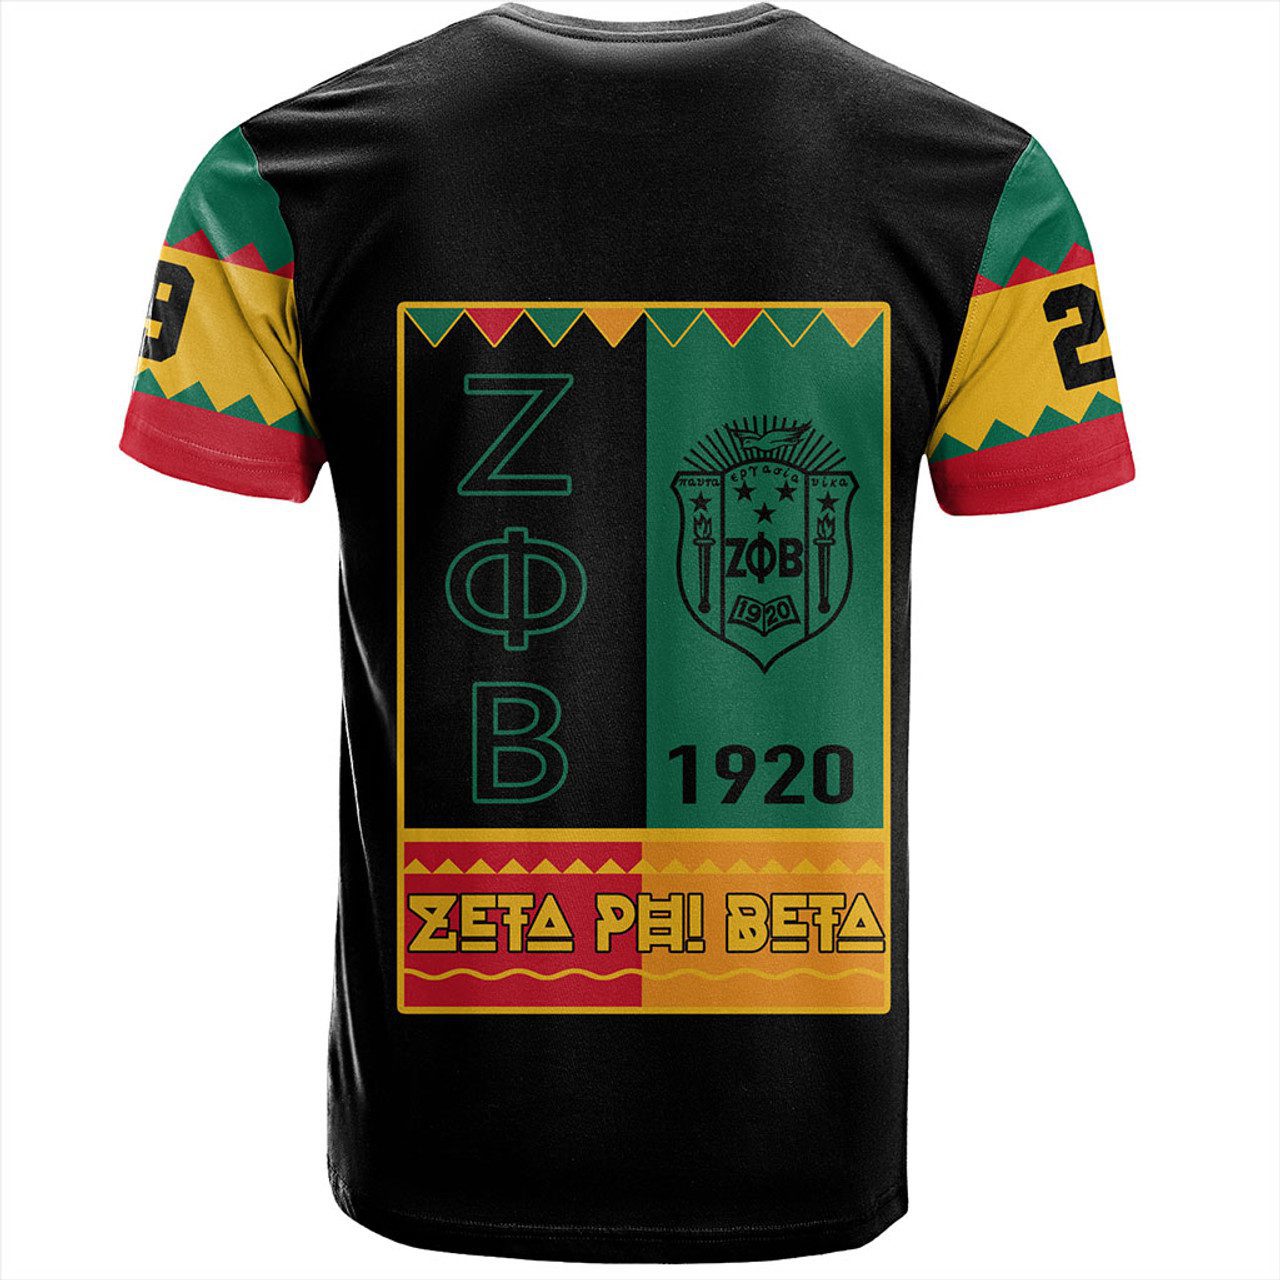 Zeta Phi Beta T-Shirt Black History Month